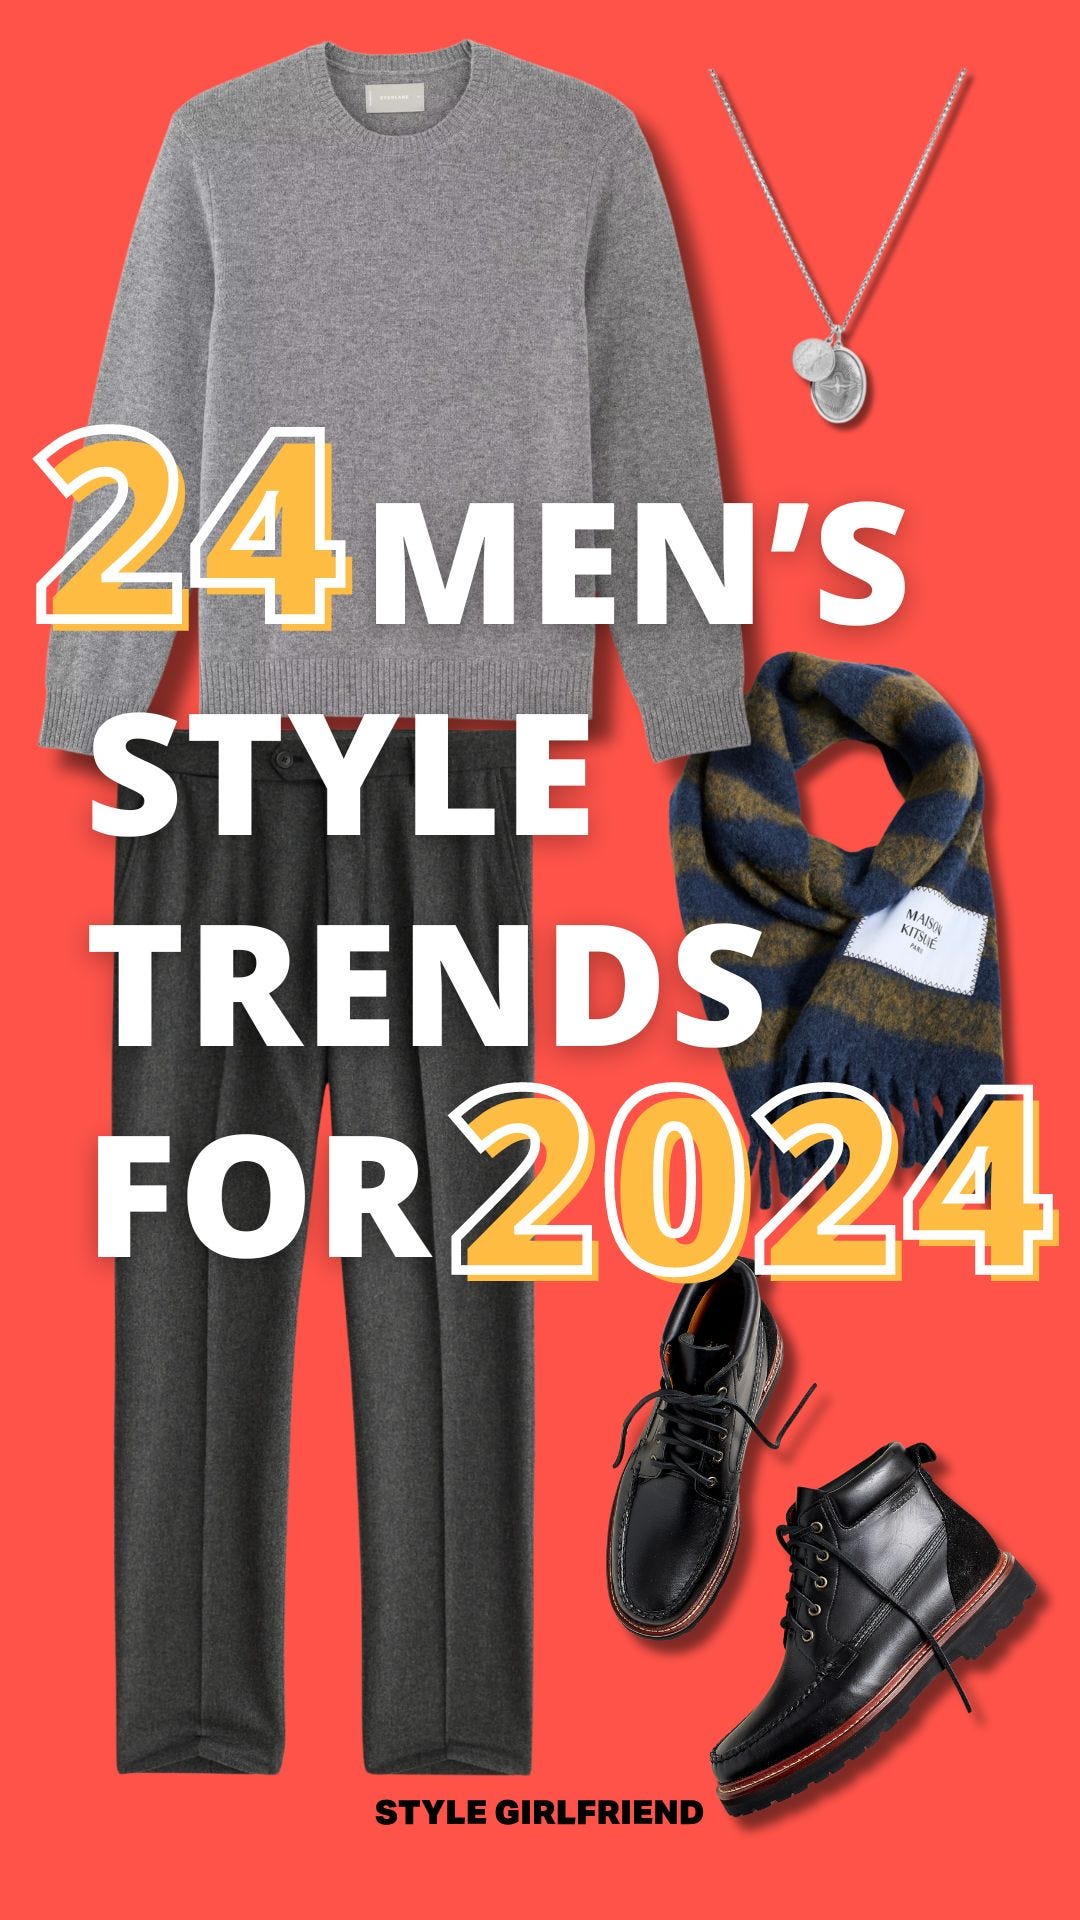 Key fashion trends of the season: Men's sportswear, Fashion